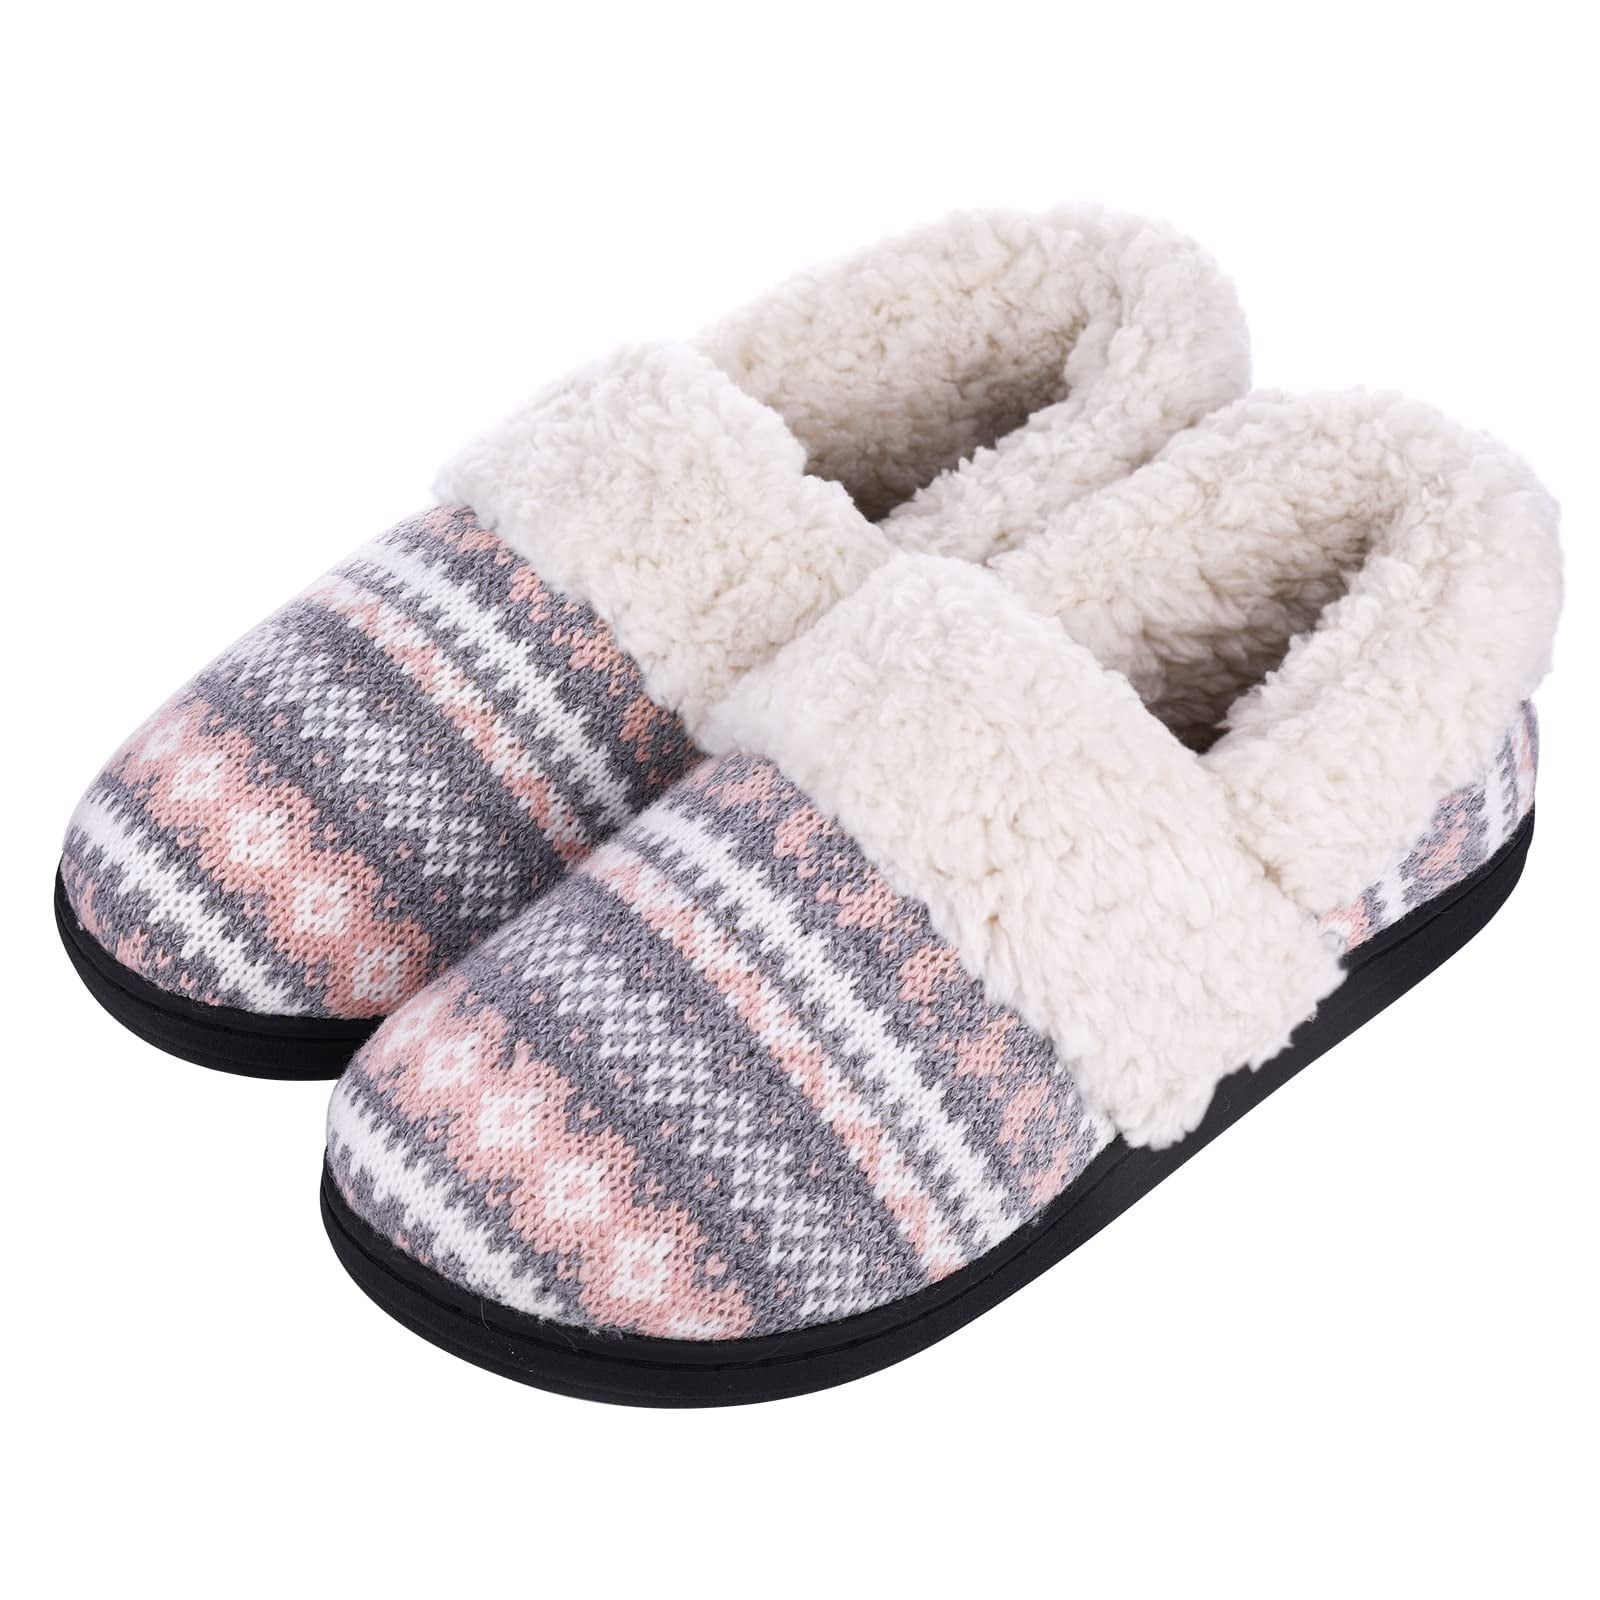 Litfun Women's Memory Foam House Shoes Warm Comfy Fuzzy House Slippers ...